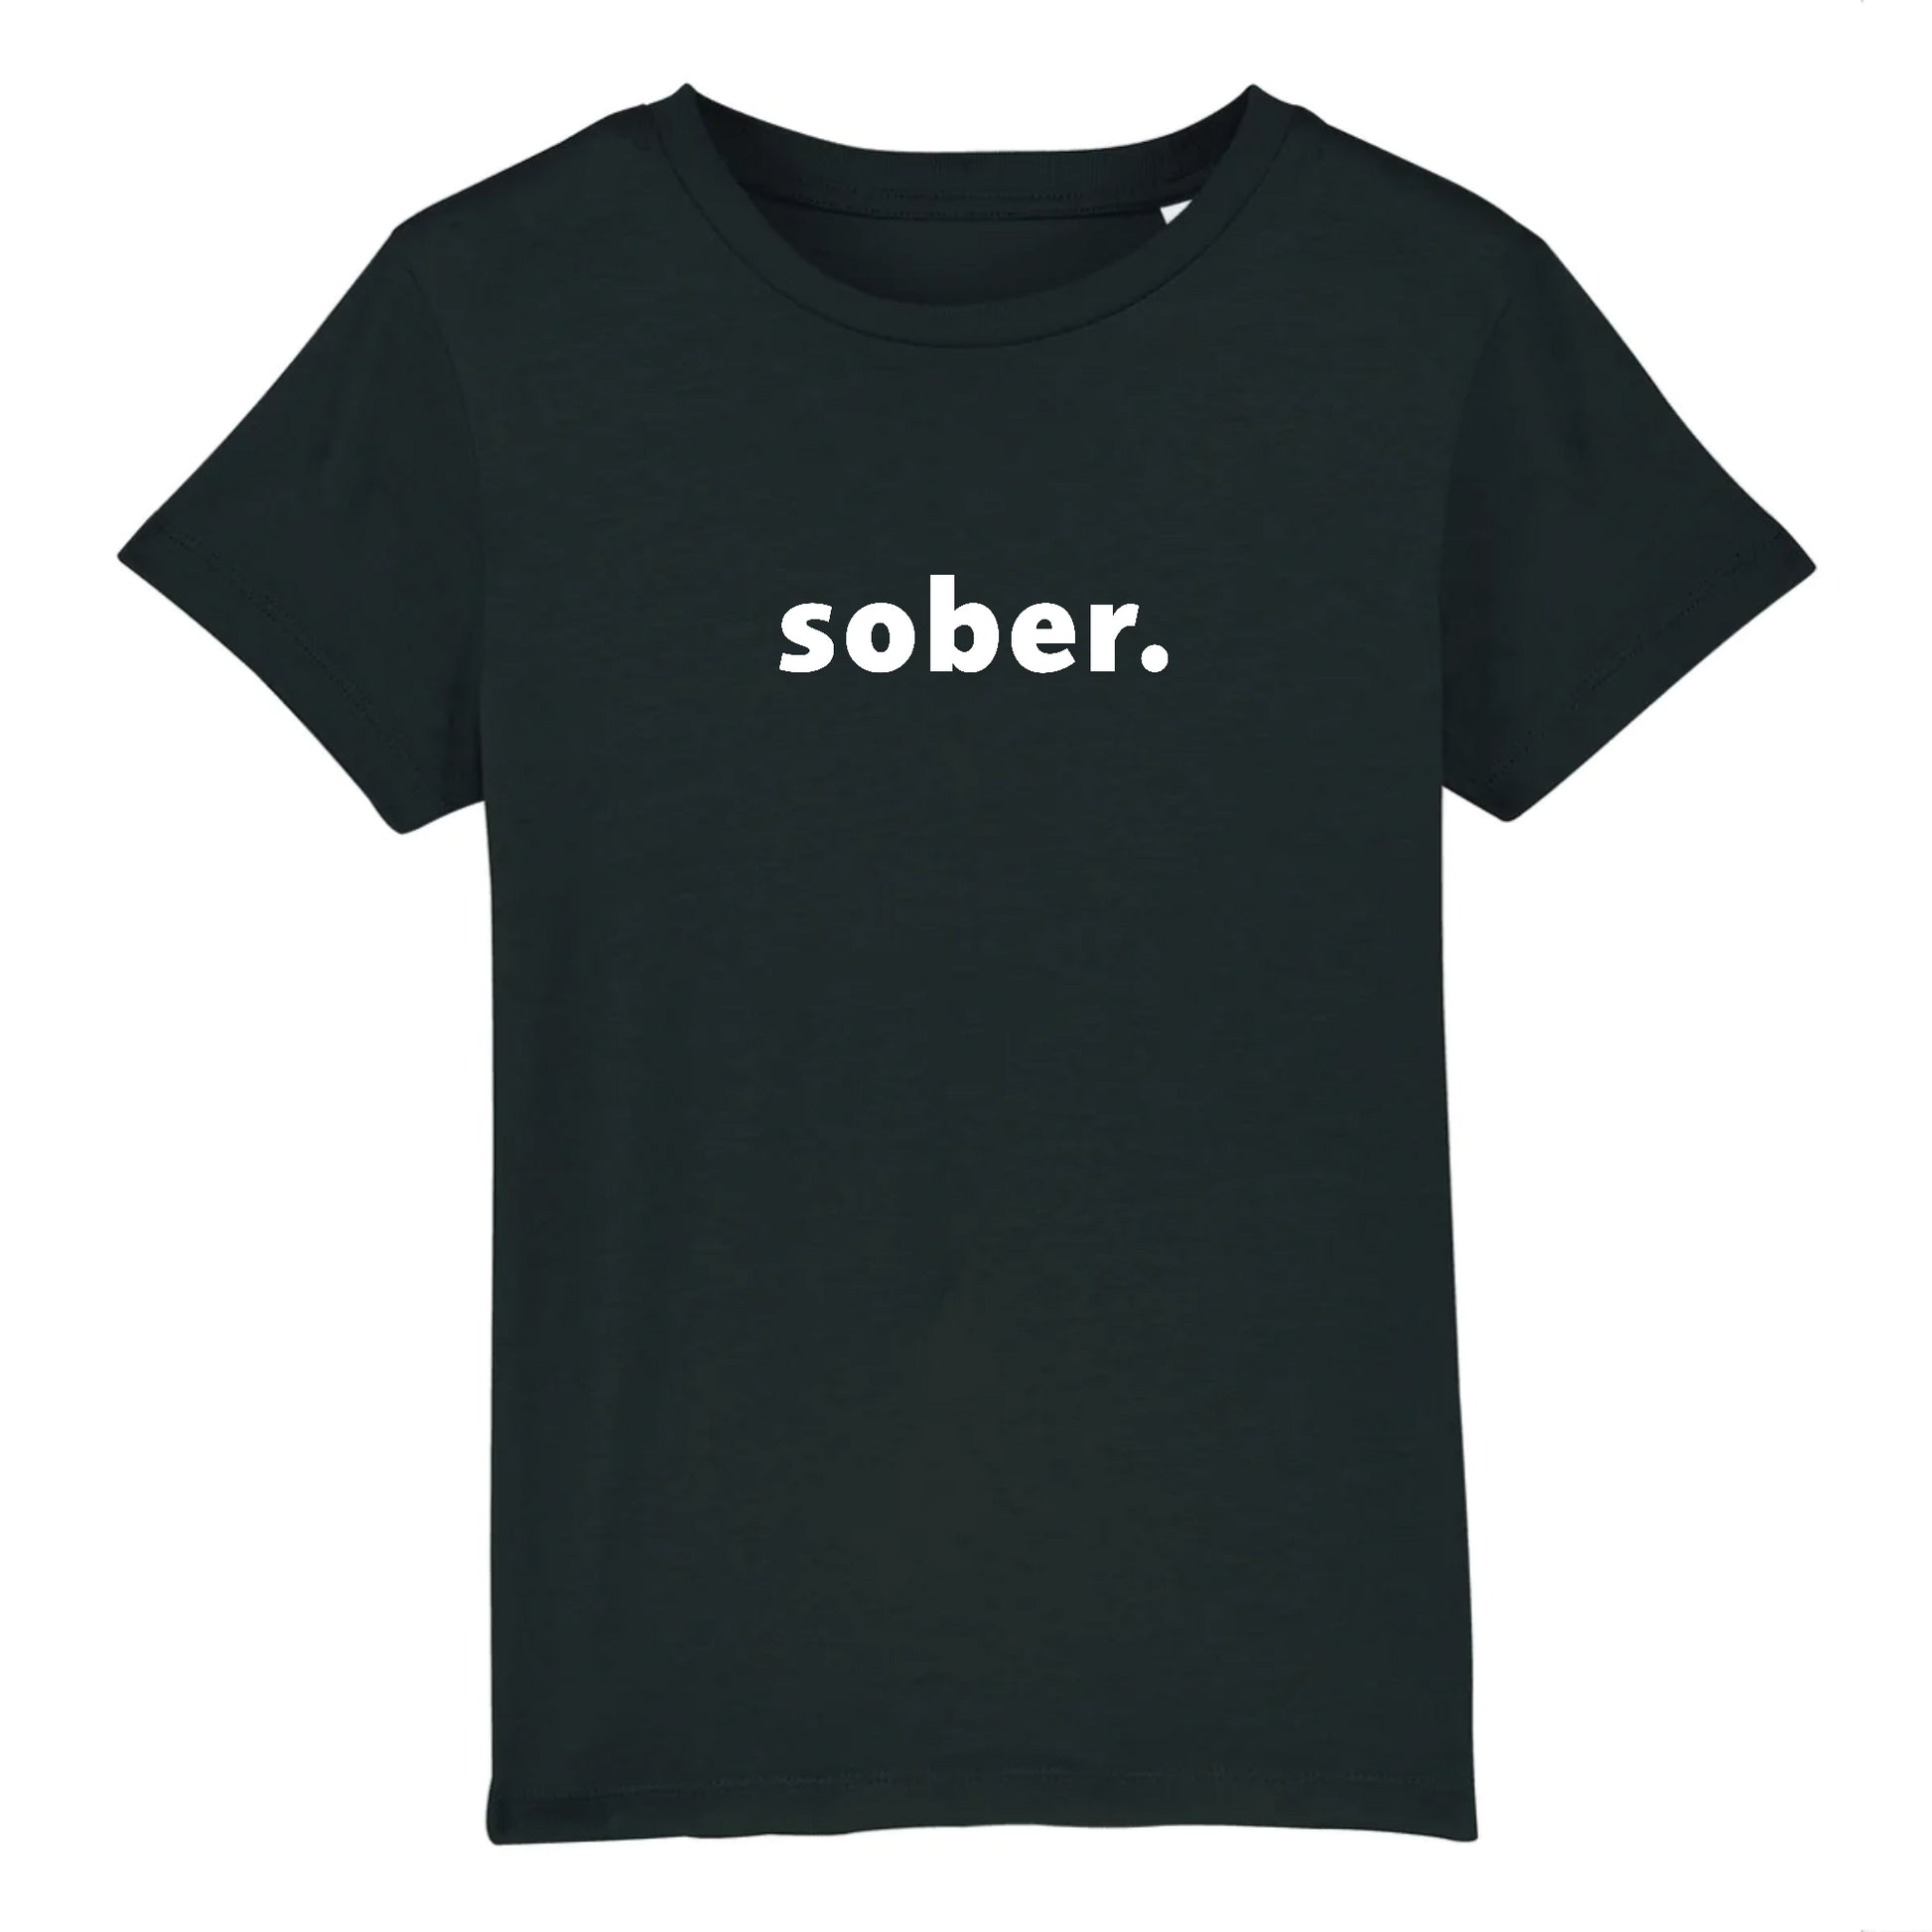 Sober alcoholic statement shirt